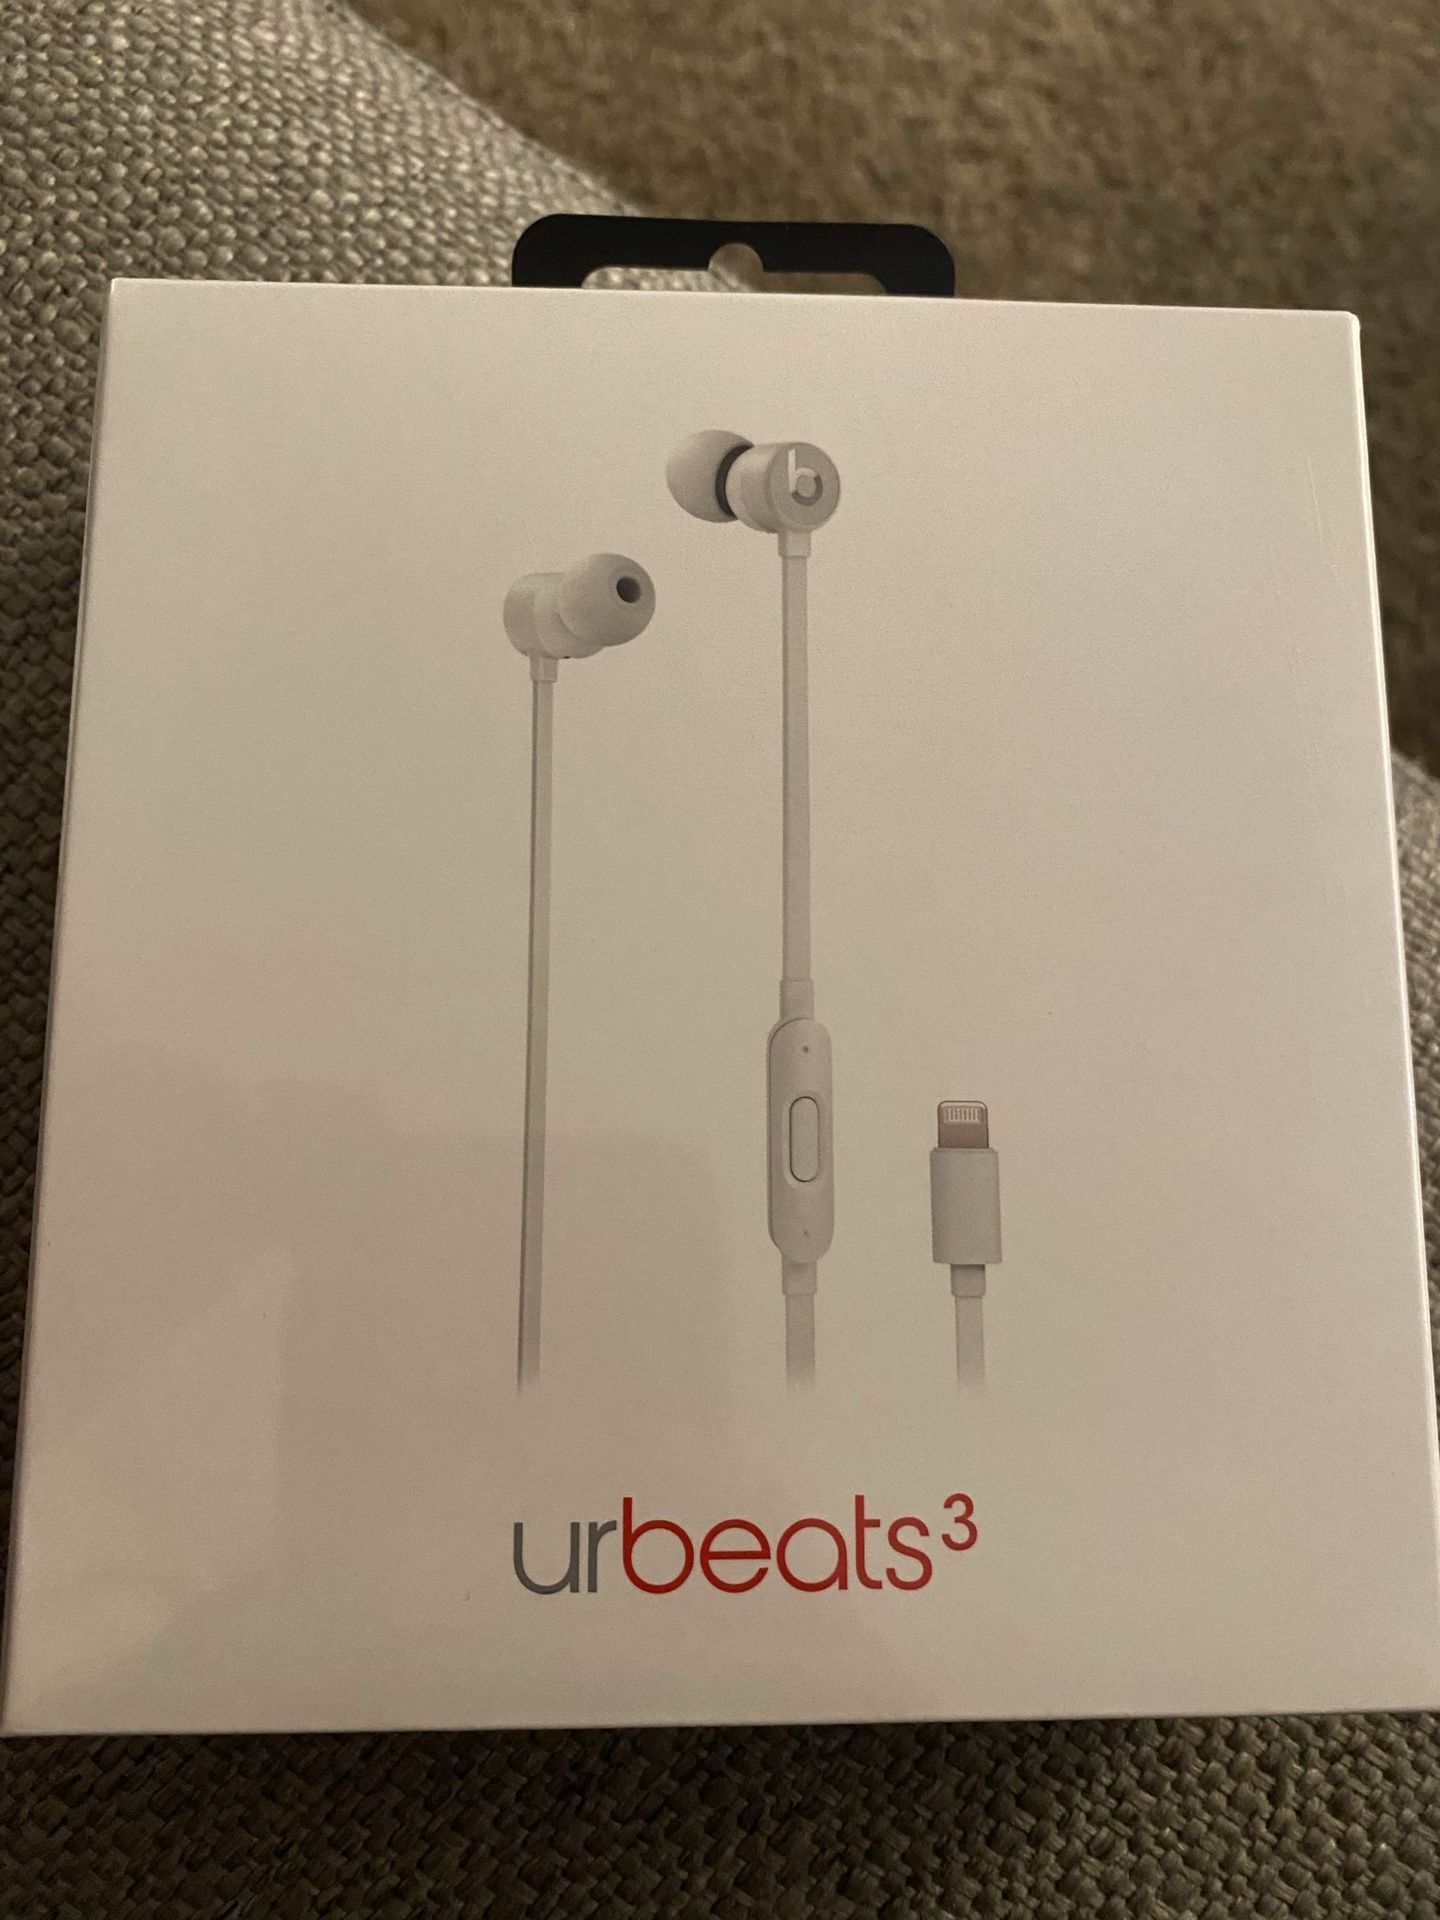 Beats by dr. Dre (urbeats3) Headphones